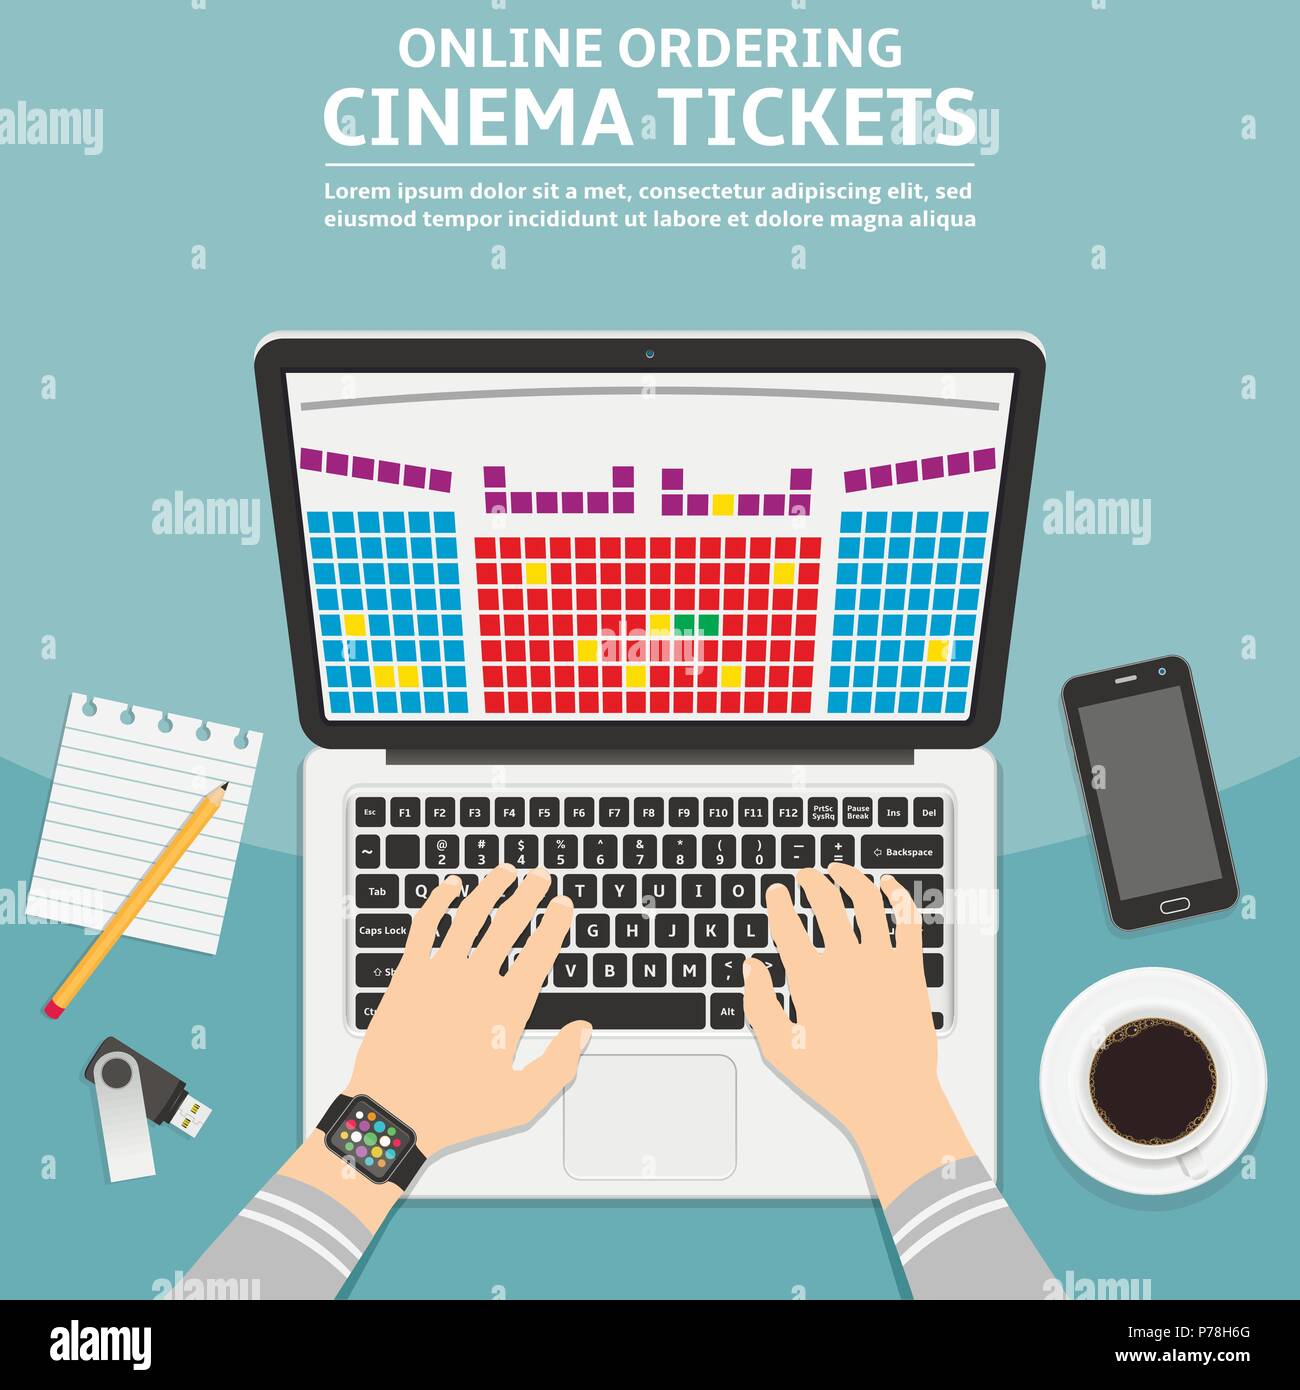 Online cinema ticket order flat design concept. Vector illustration. Stock Vector